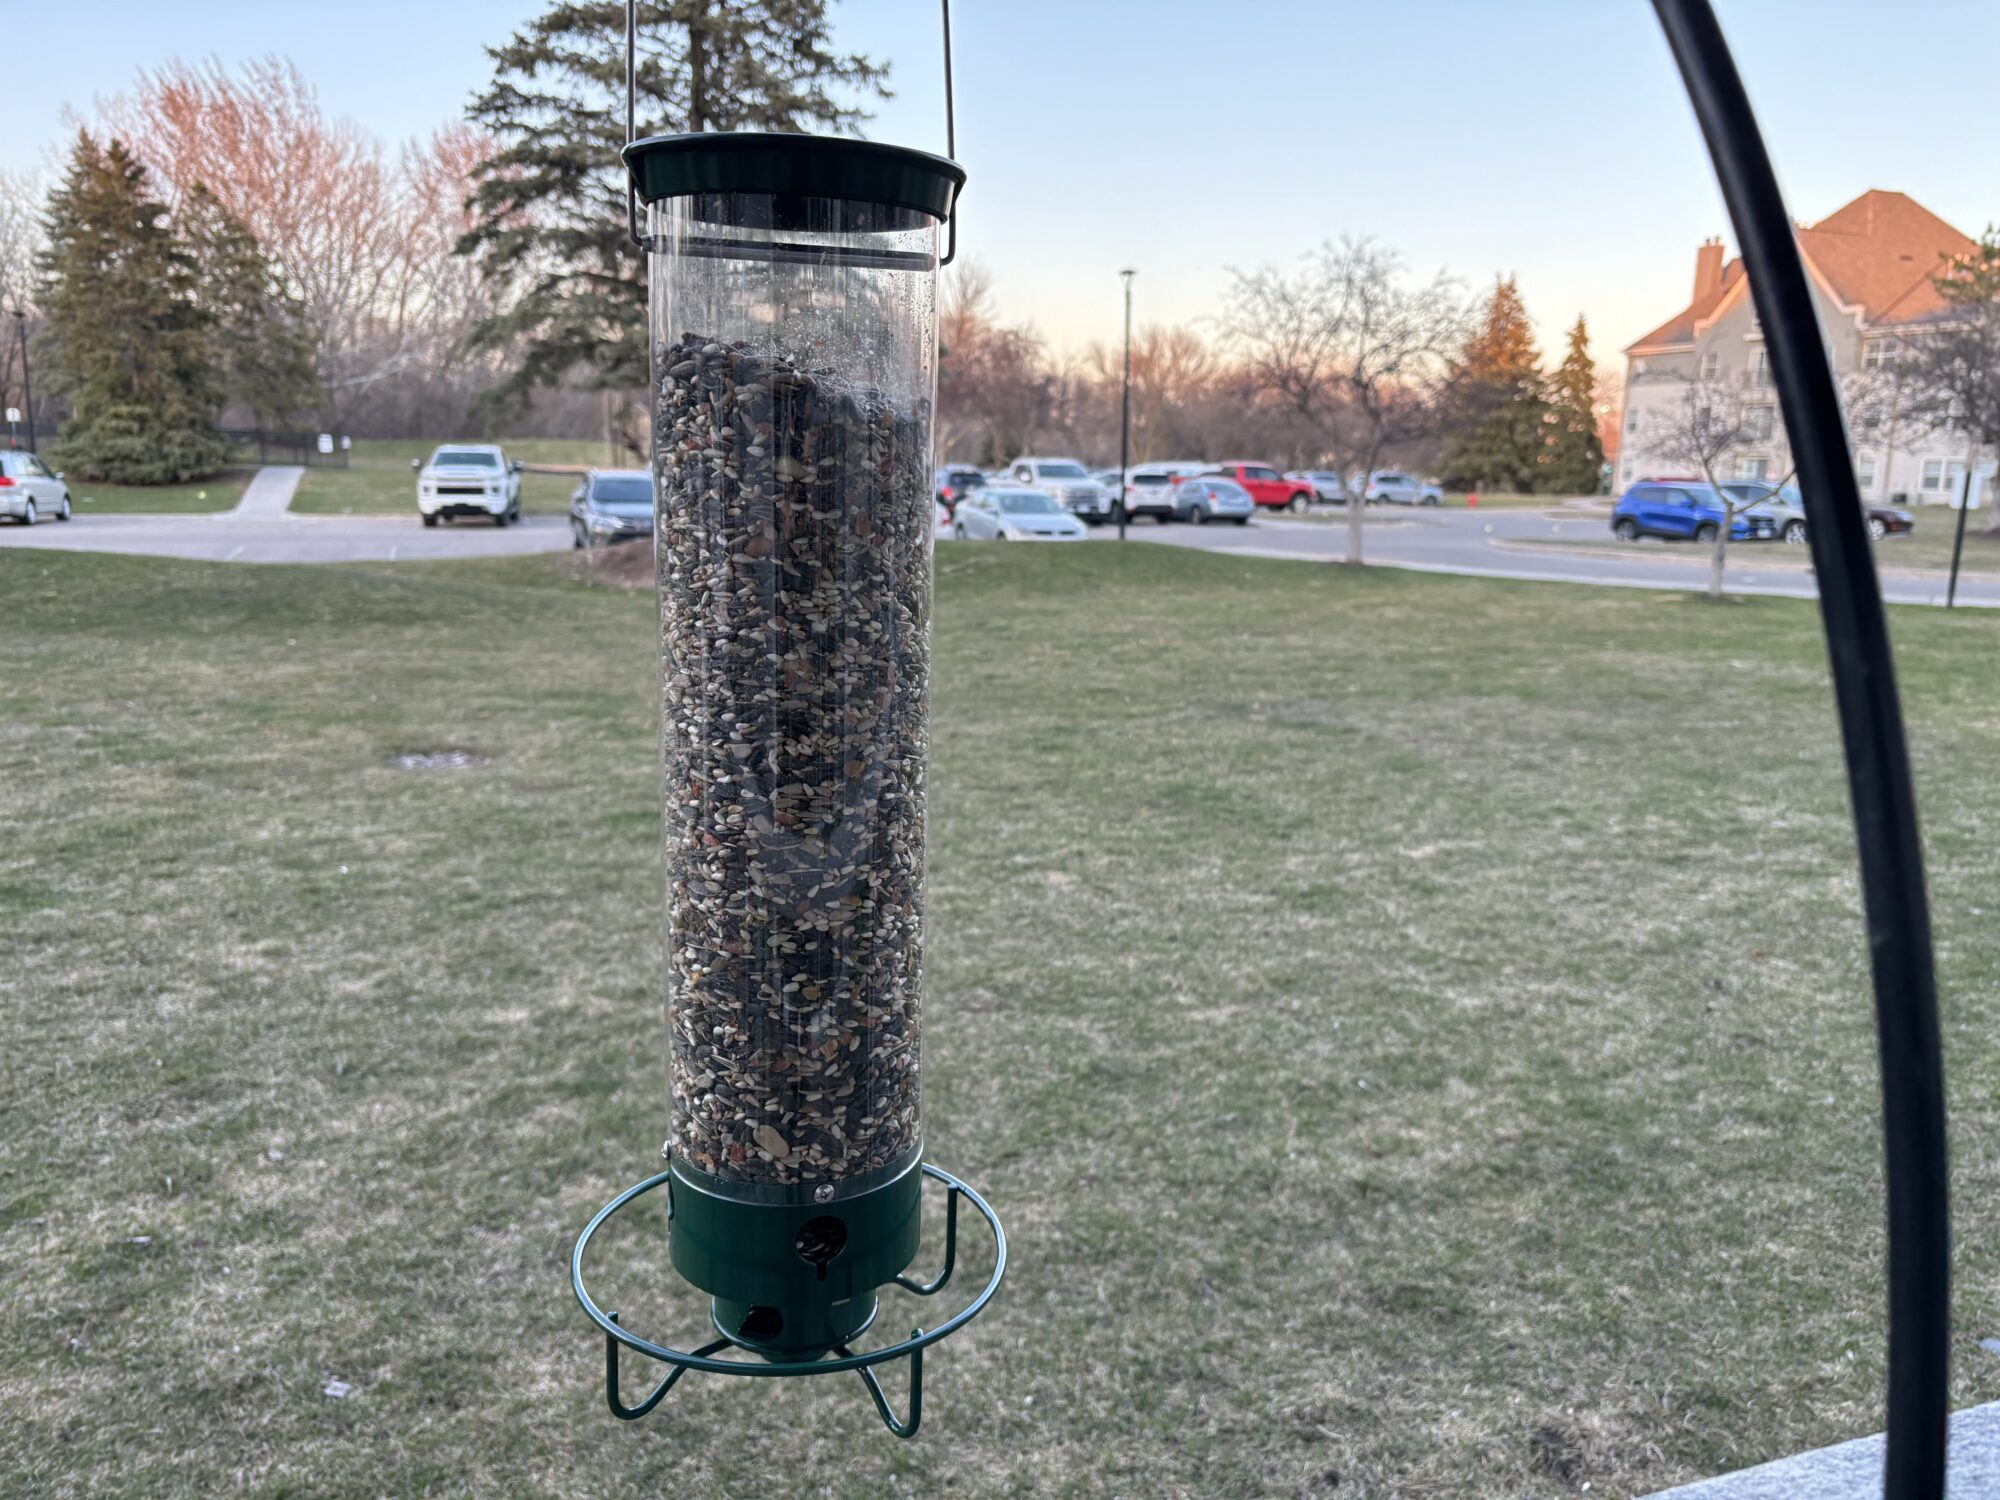 The Yankee Droll Squirrel-proof bird feeder